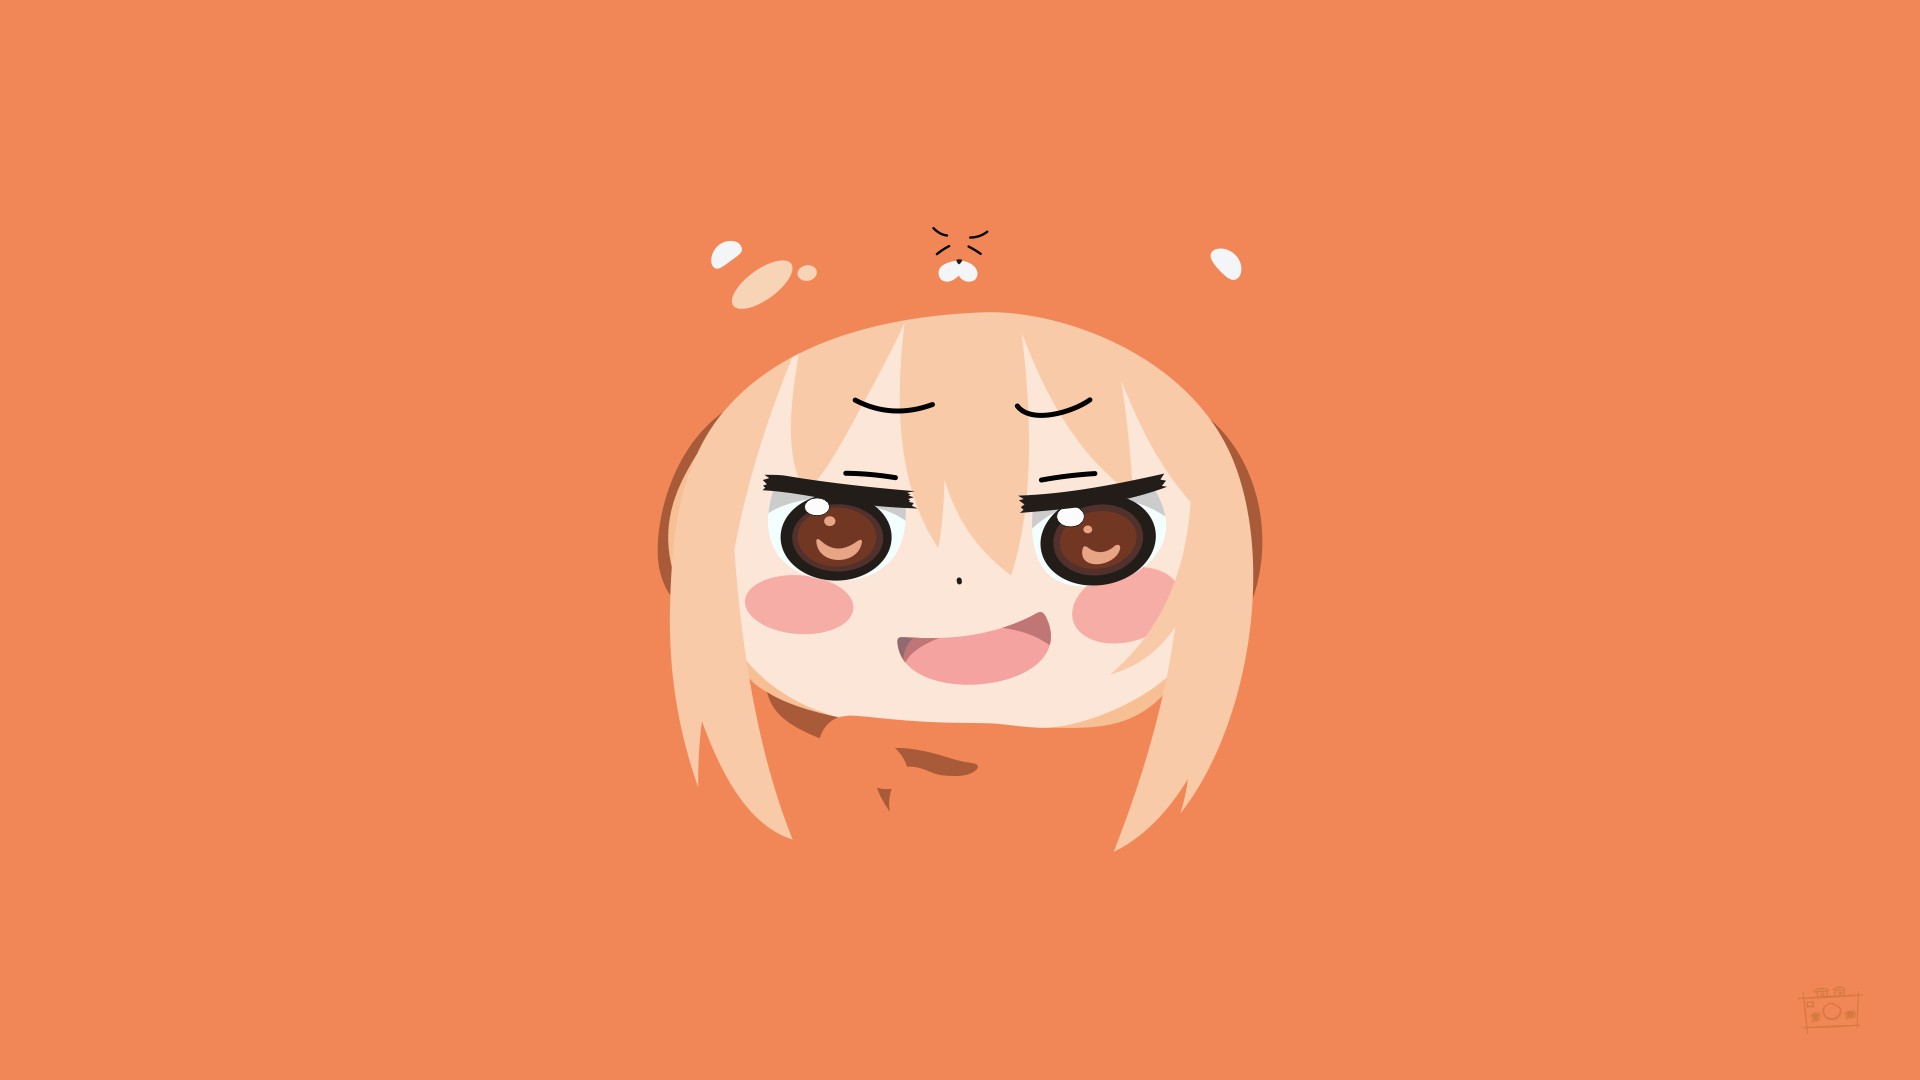 Anime 1920x1080 Himouto! Umaru-chan Doma Umaru minimalism orange background anime girls anime simple background